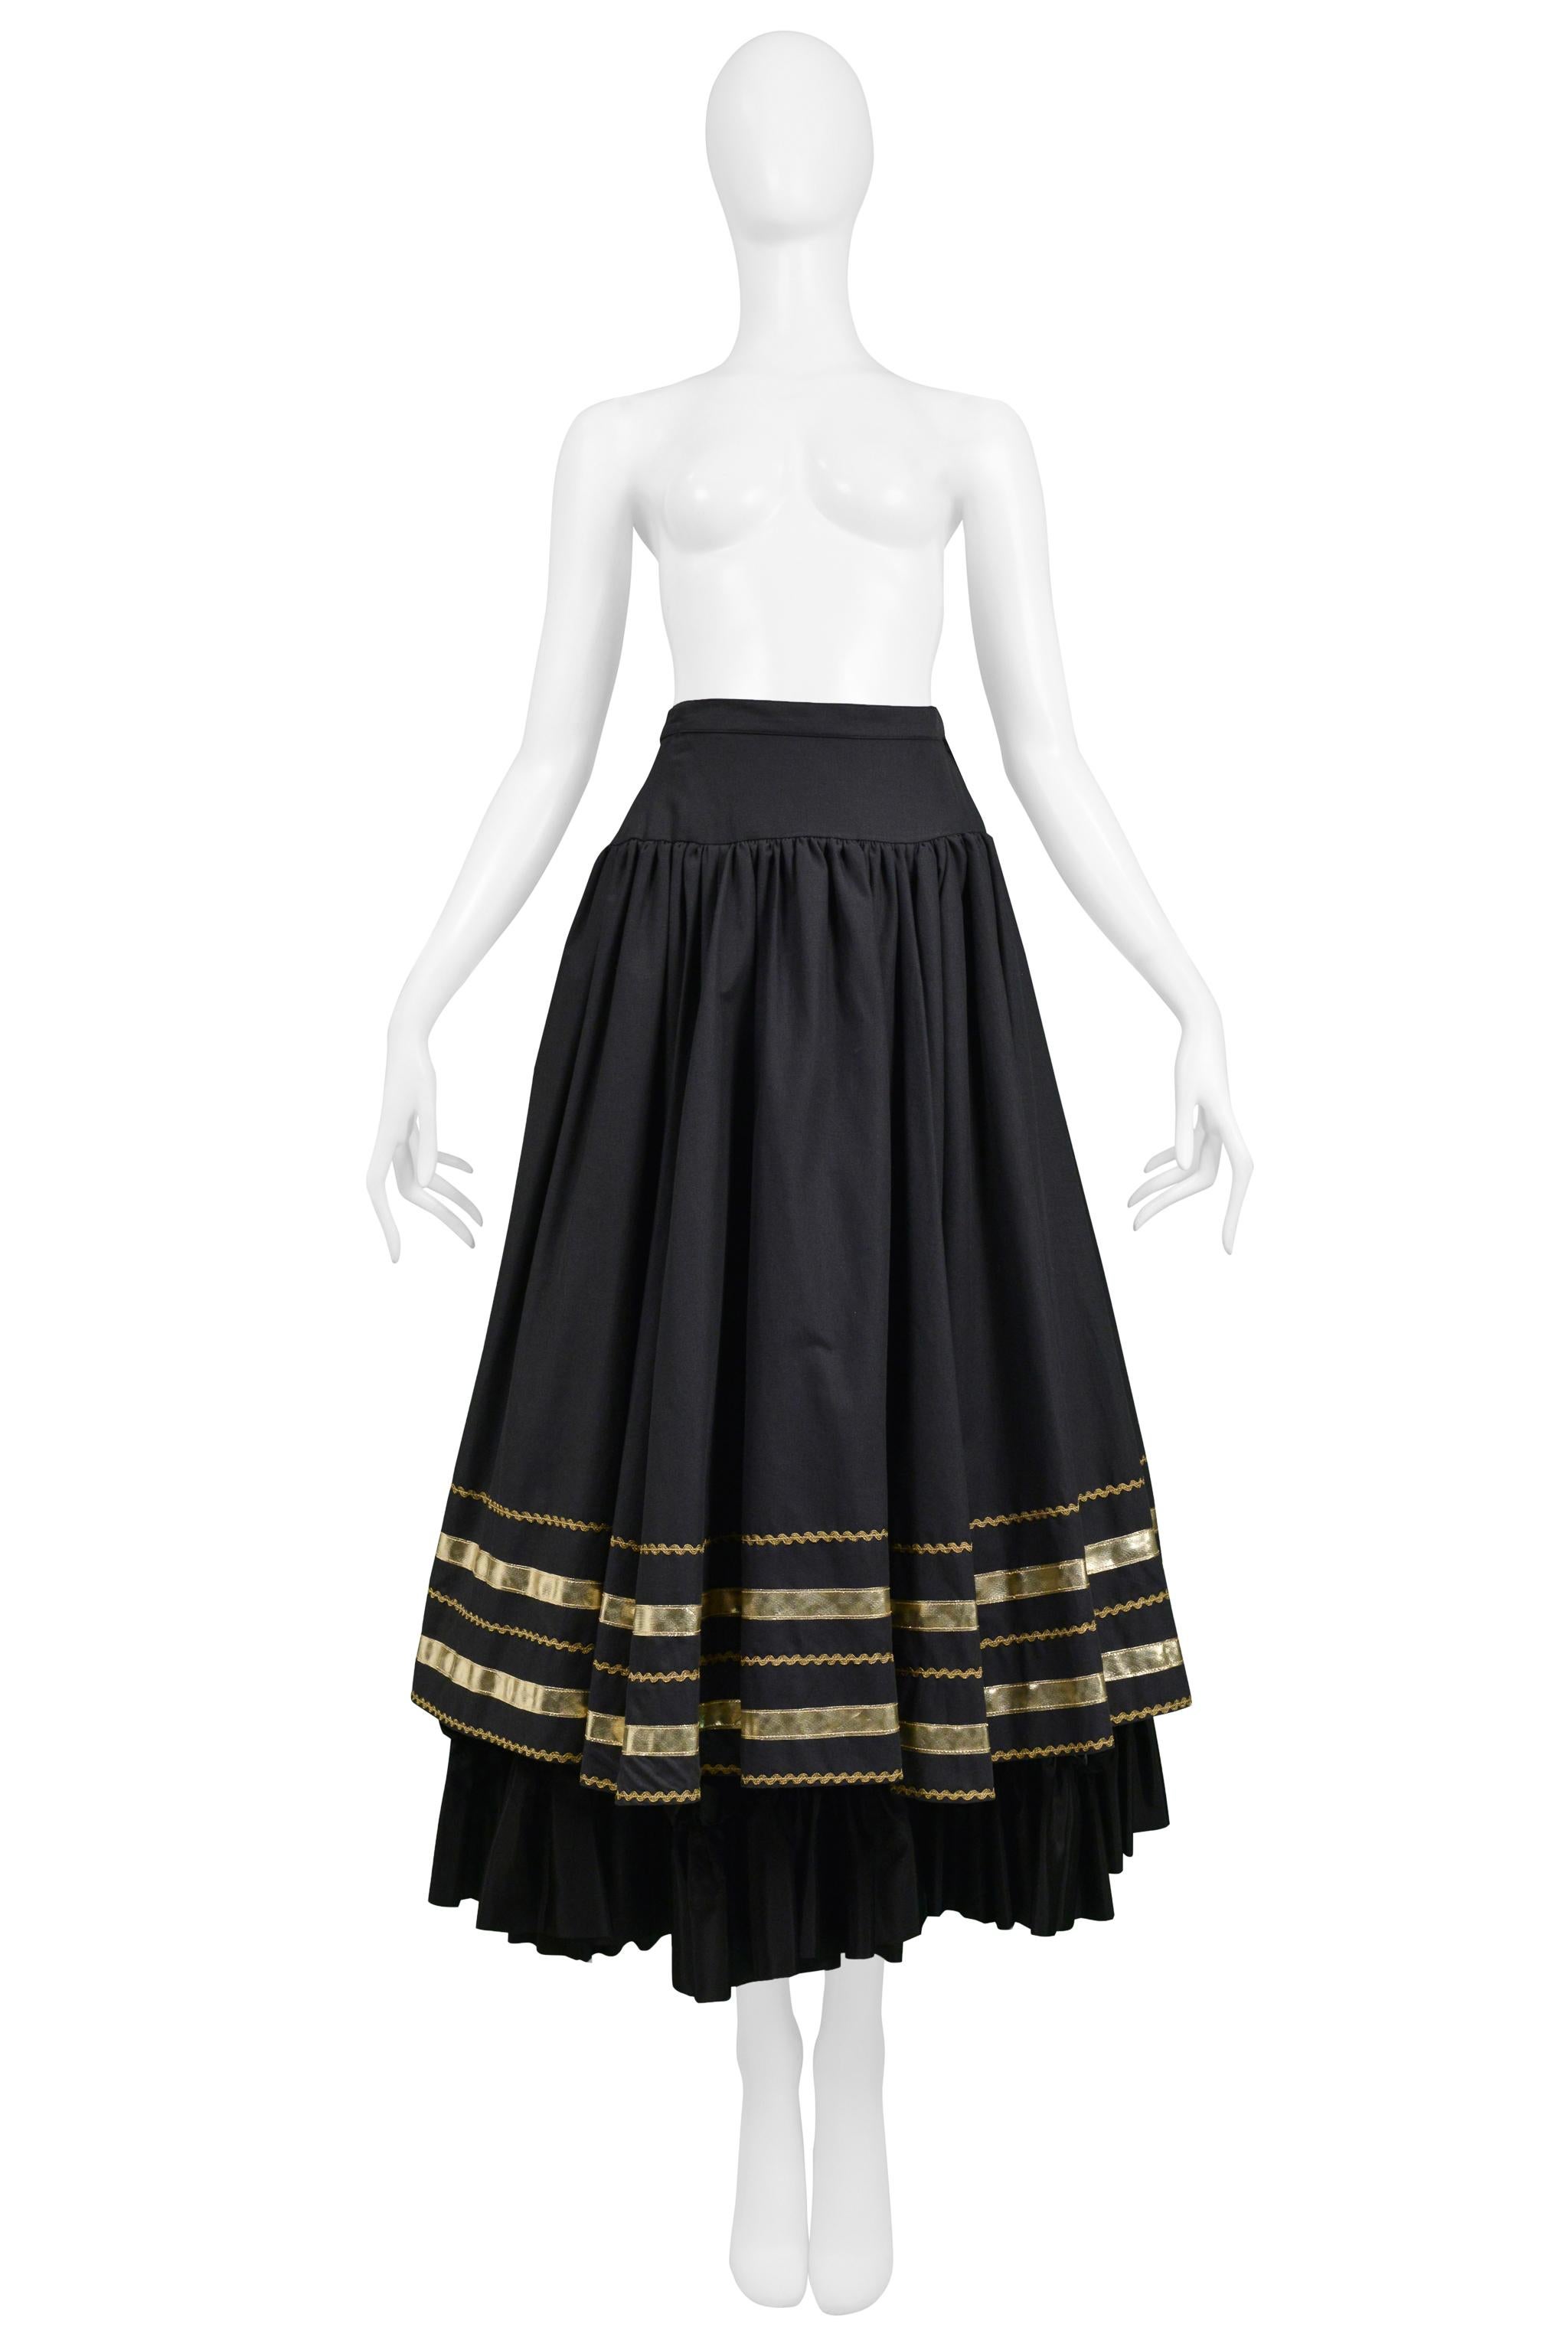 Yves Saint Laurent Ysl Black & Gold Corset Top & Fancy Peasant Skirt 1970s For Sale 5